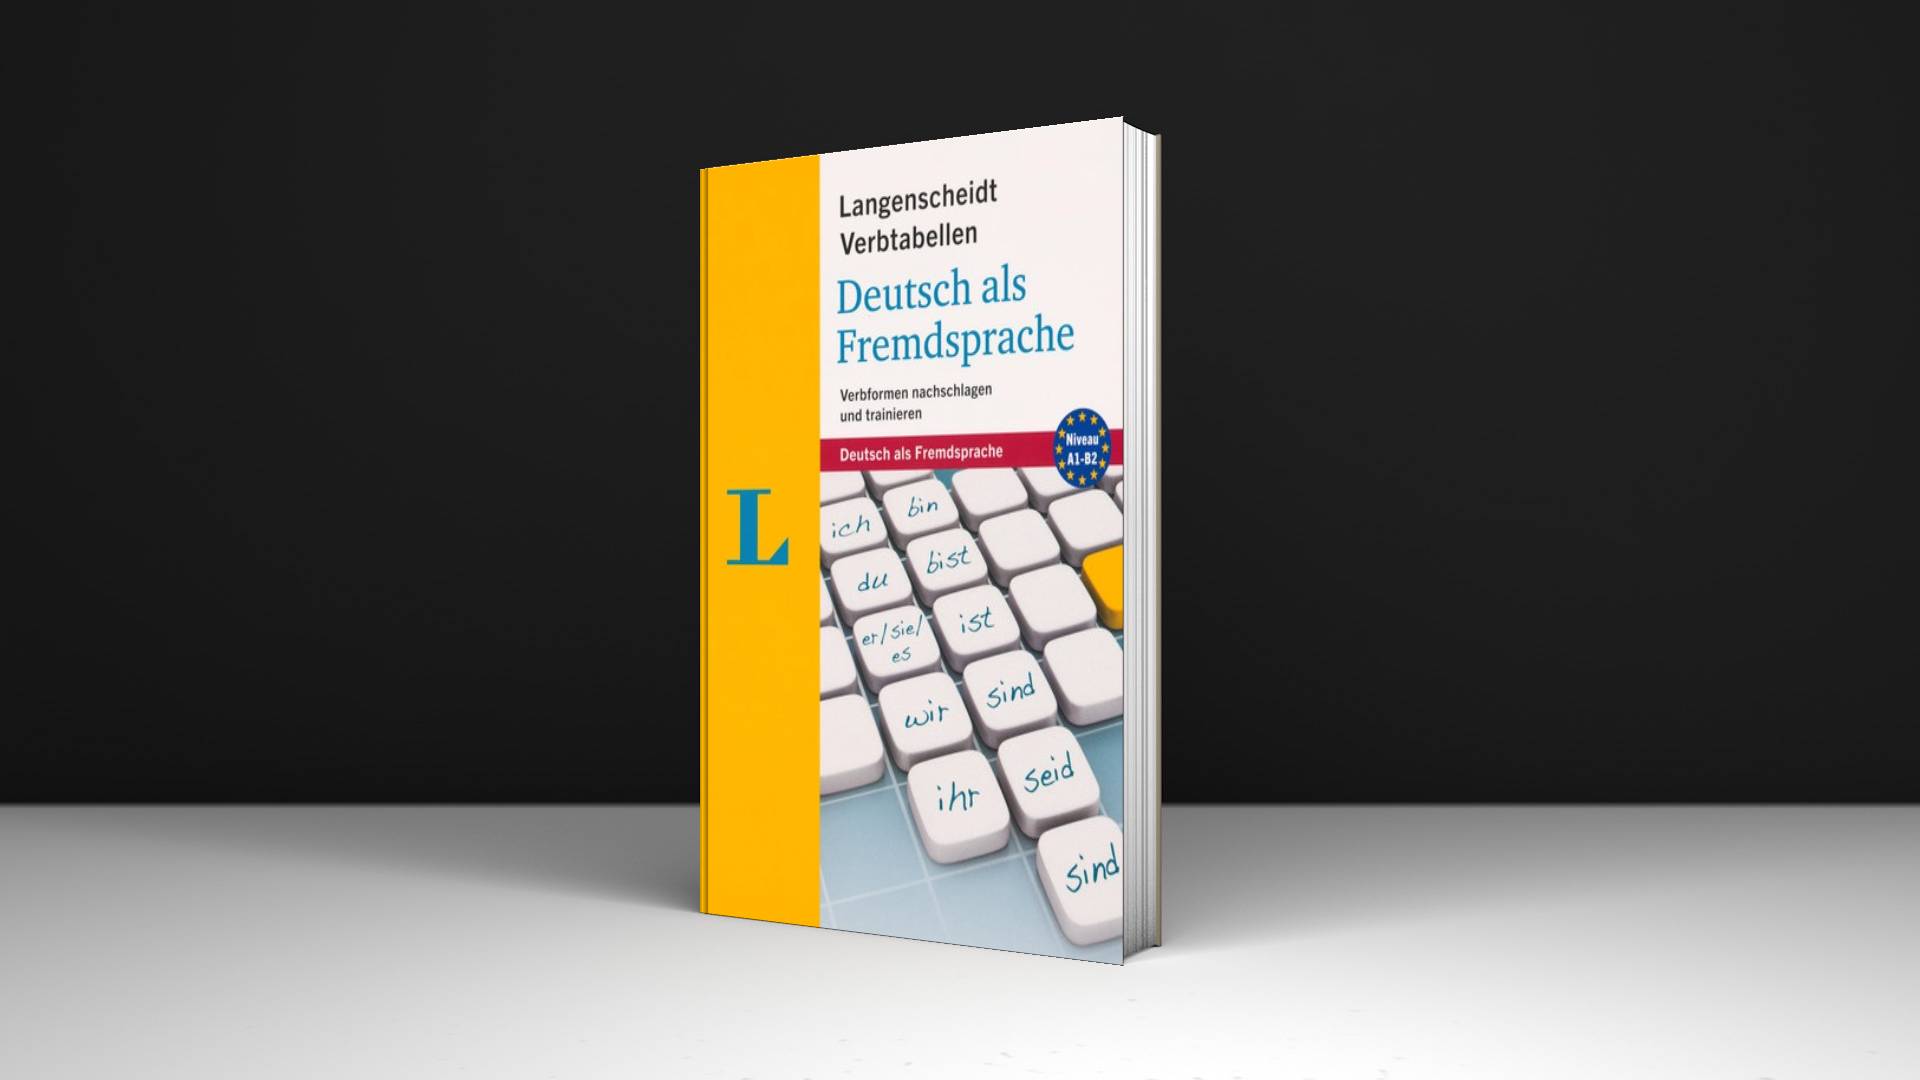 خرید کتاب زبان | زبان استور | Langenscheidt Verbtabellen Deutsch als Fremdsprache | کتاب زبان آلمانی